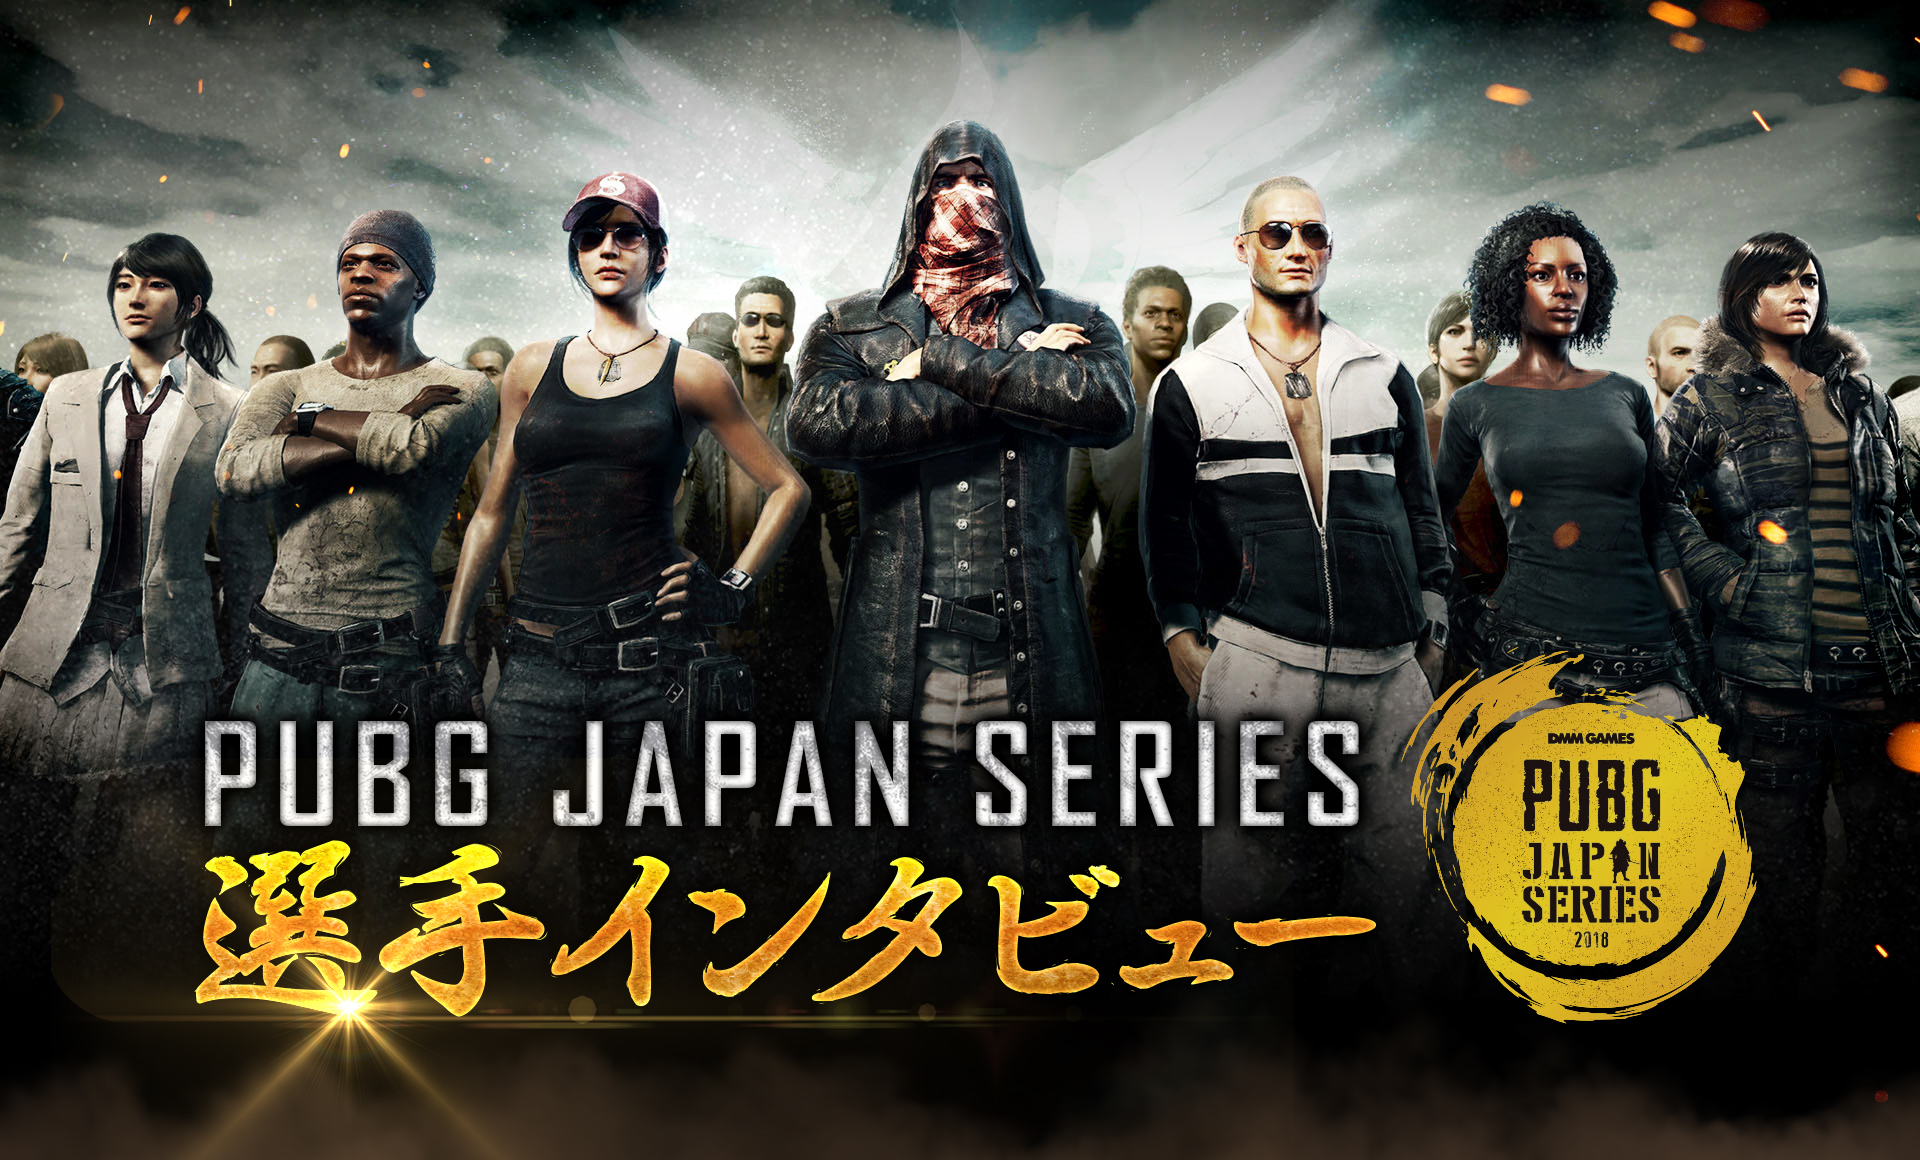 Pjsaリーグ 野良連合rossobianco選手インタビュー Pubg Japan Series Pjs 公式 Dmm Games